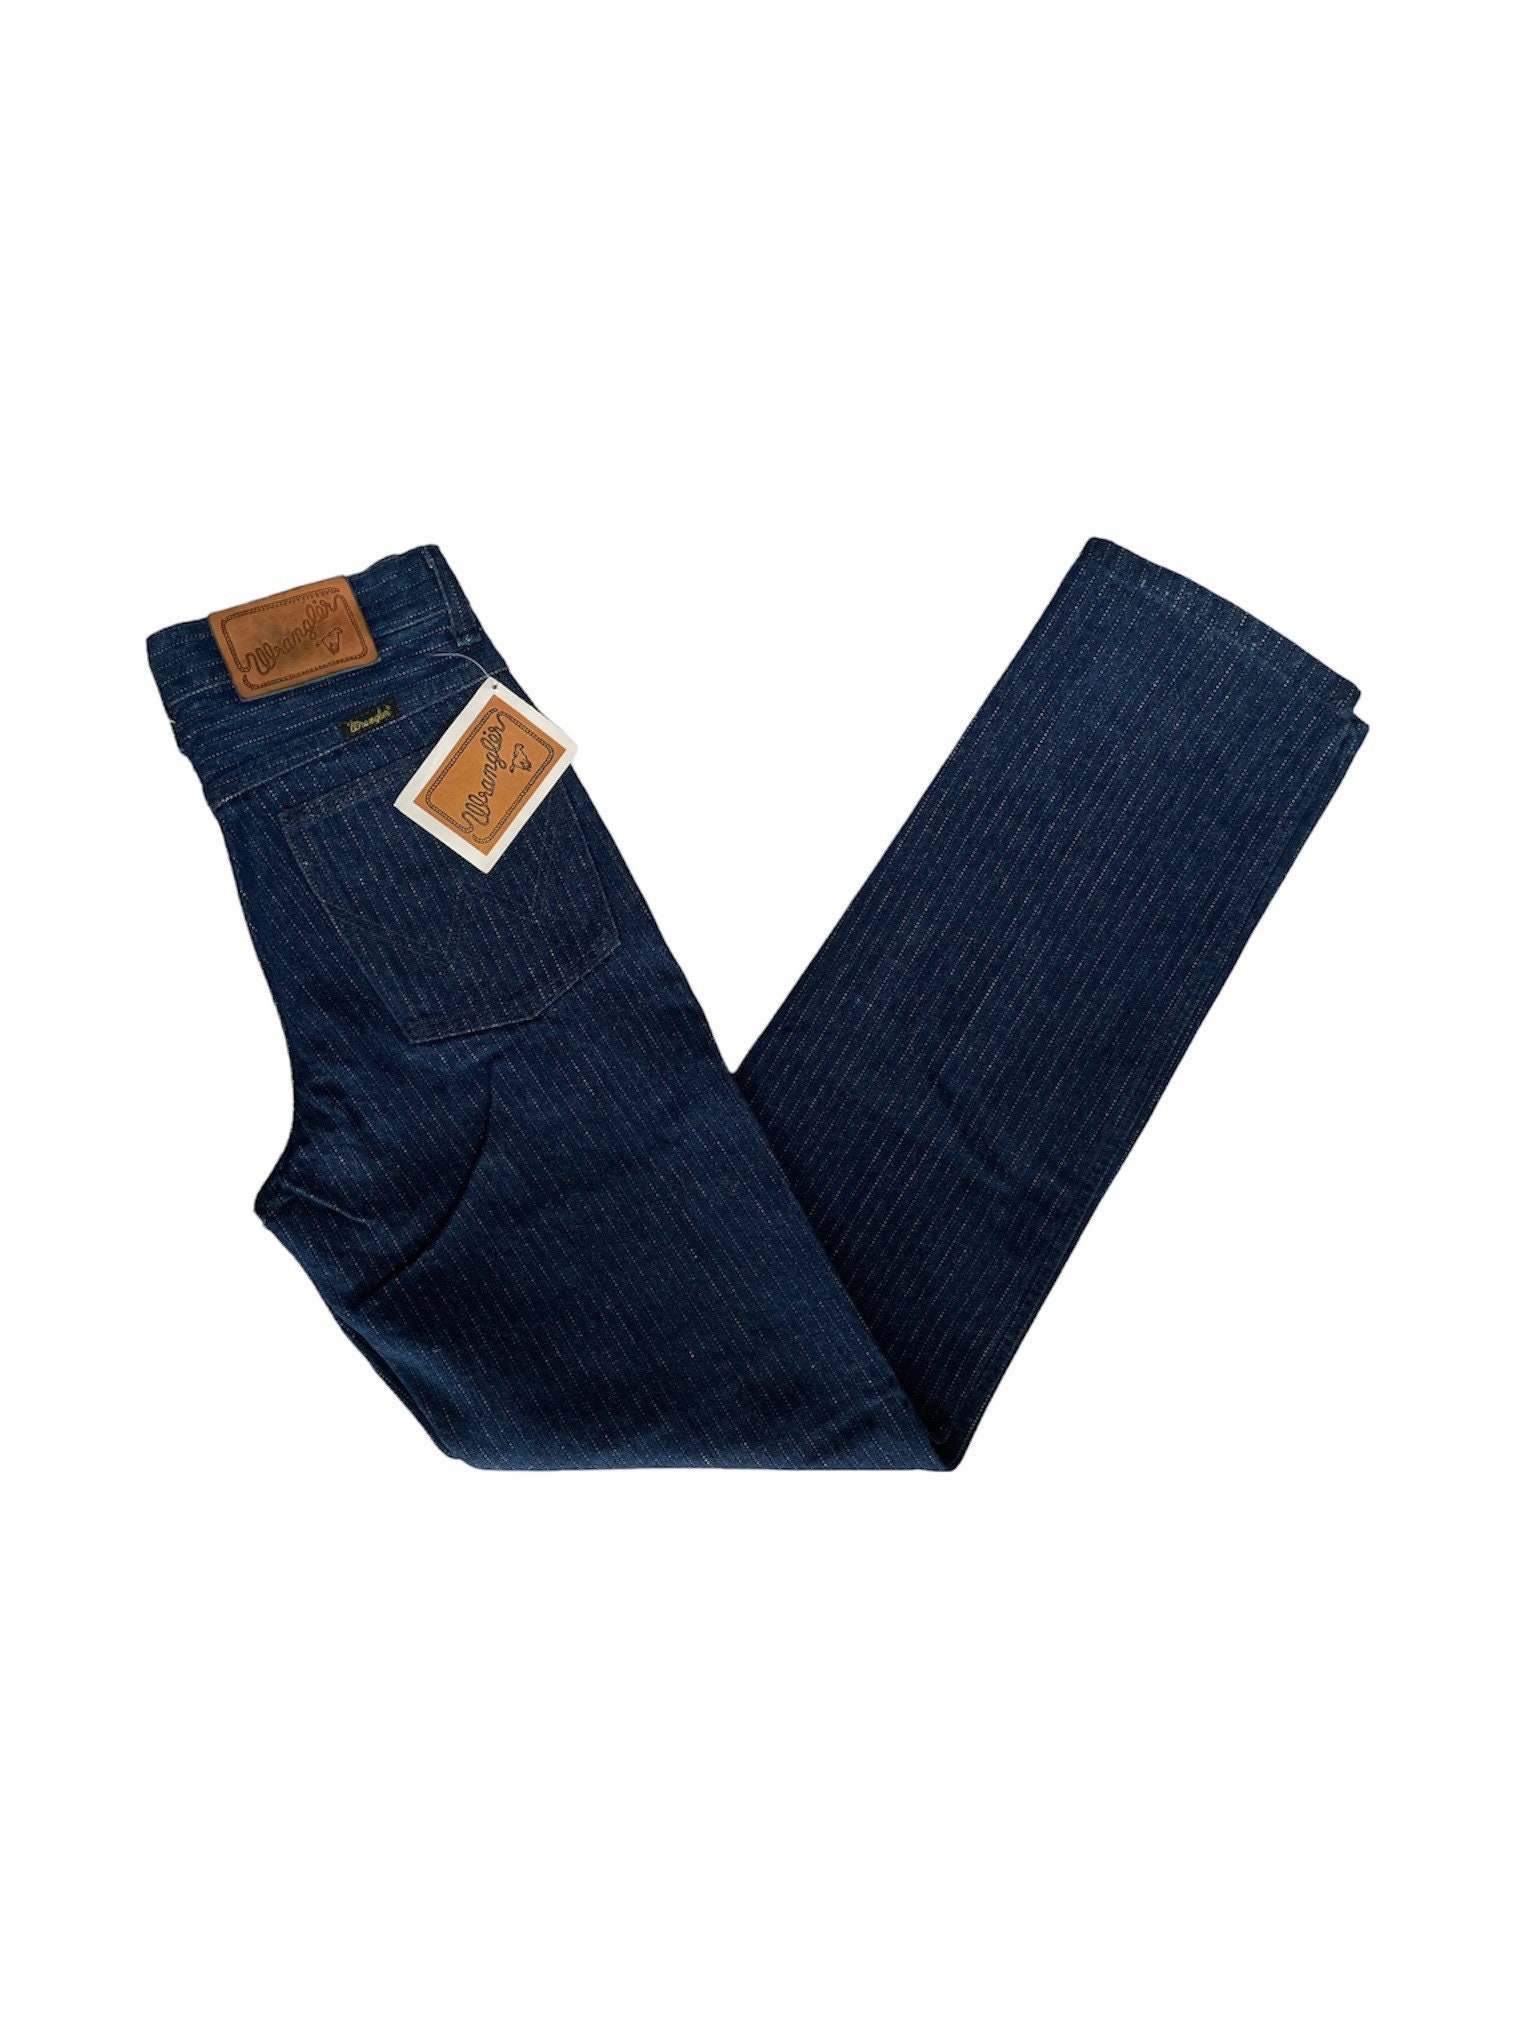 Vintage Wrangler Sea Wash Jeans Pants Size 30x32 Straight Leg Etsy